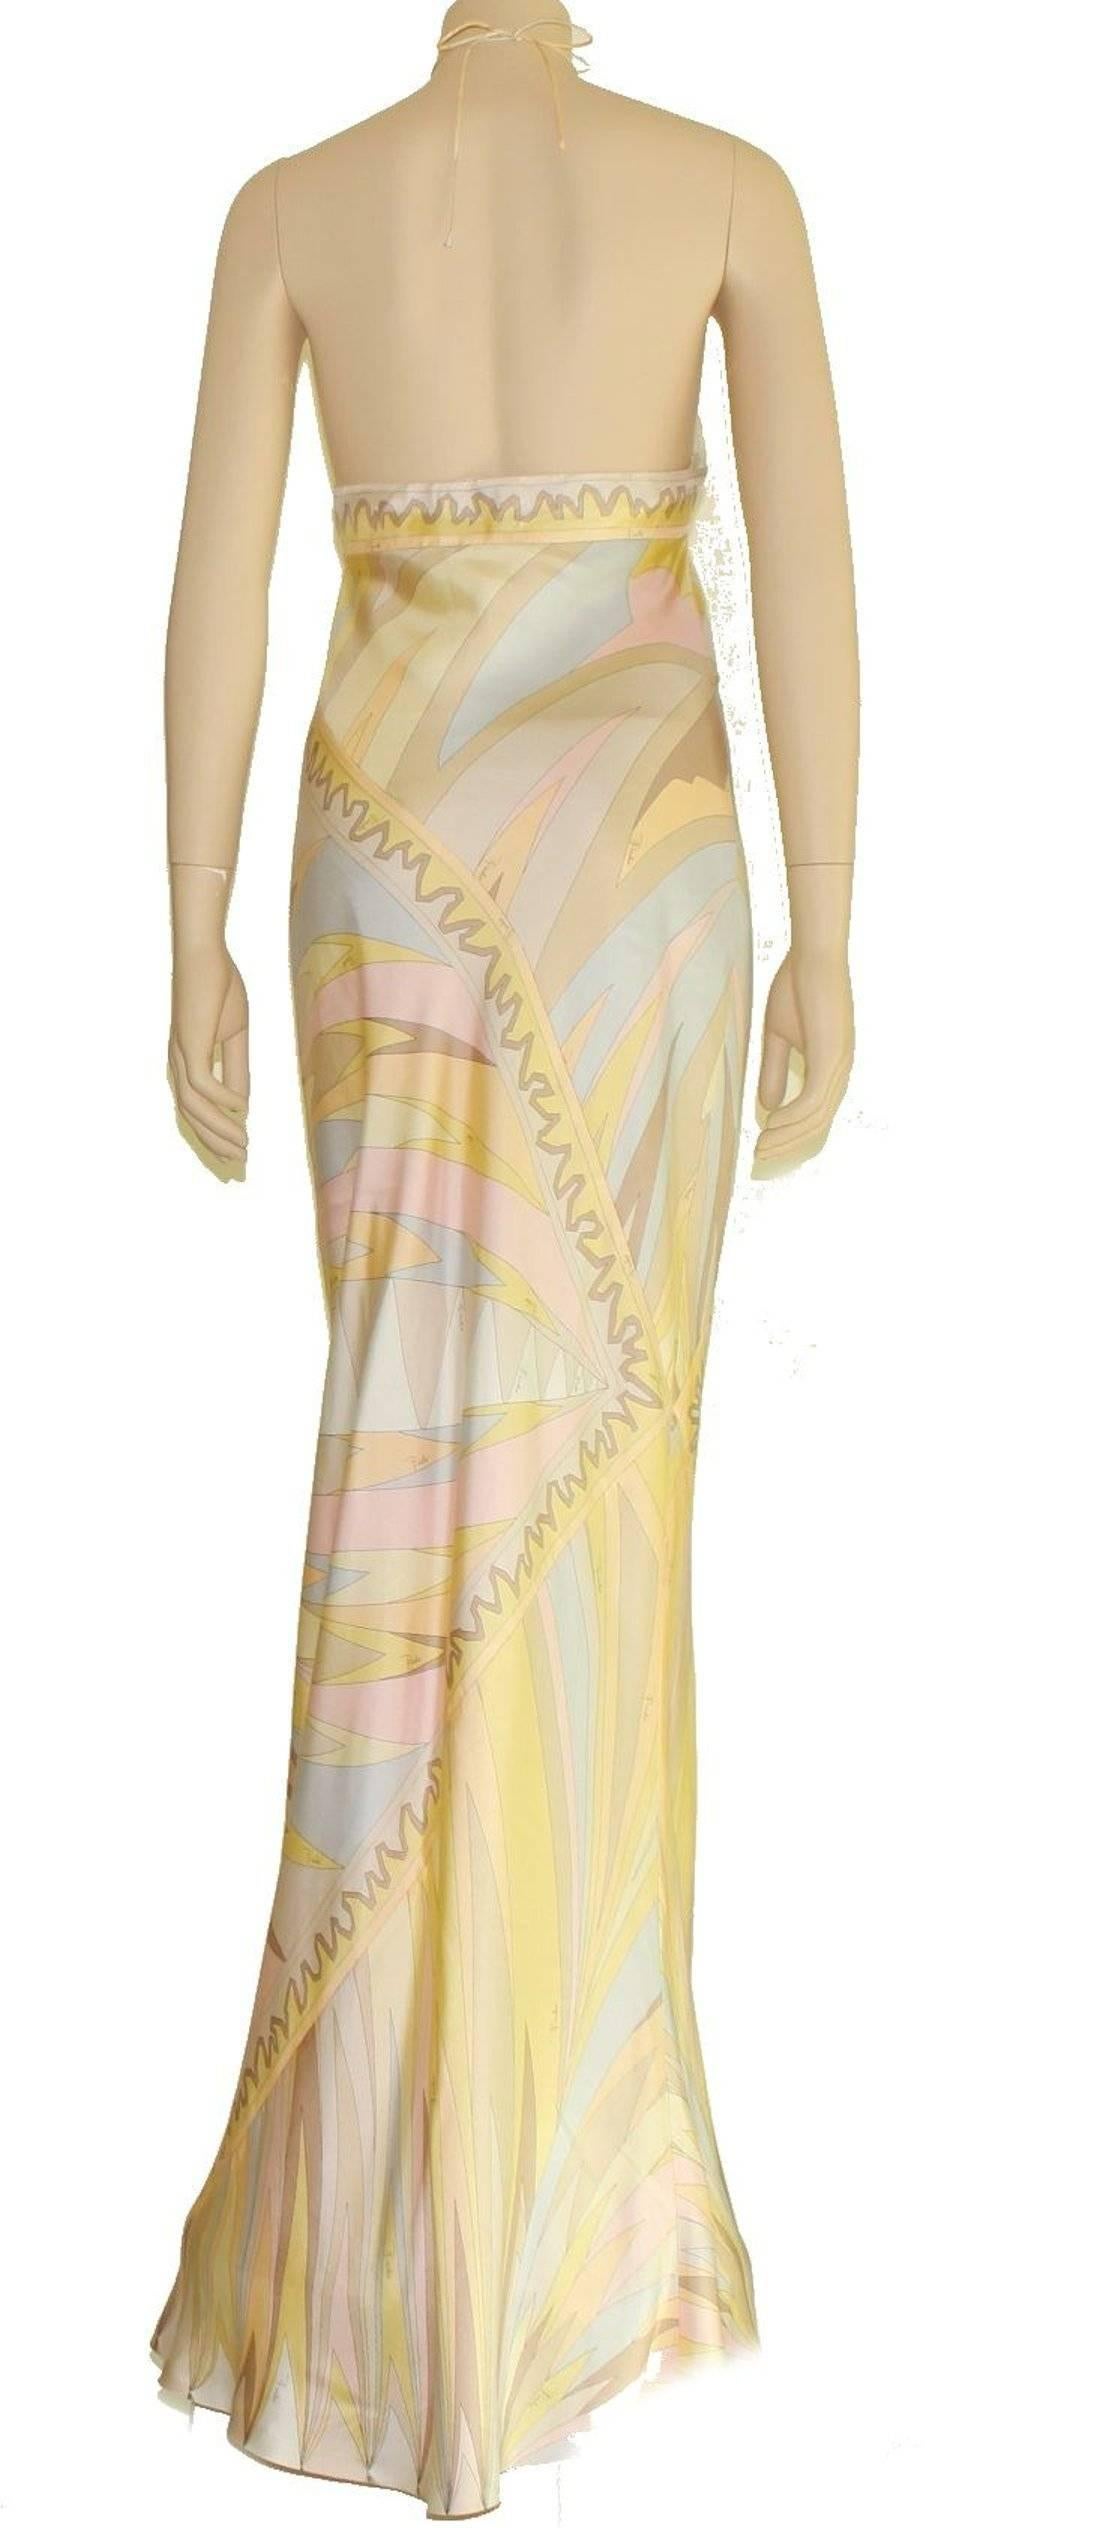 Beige Stunning Emilio Pucci Signature Print Evening Dress Gown